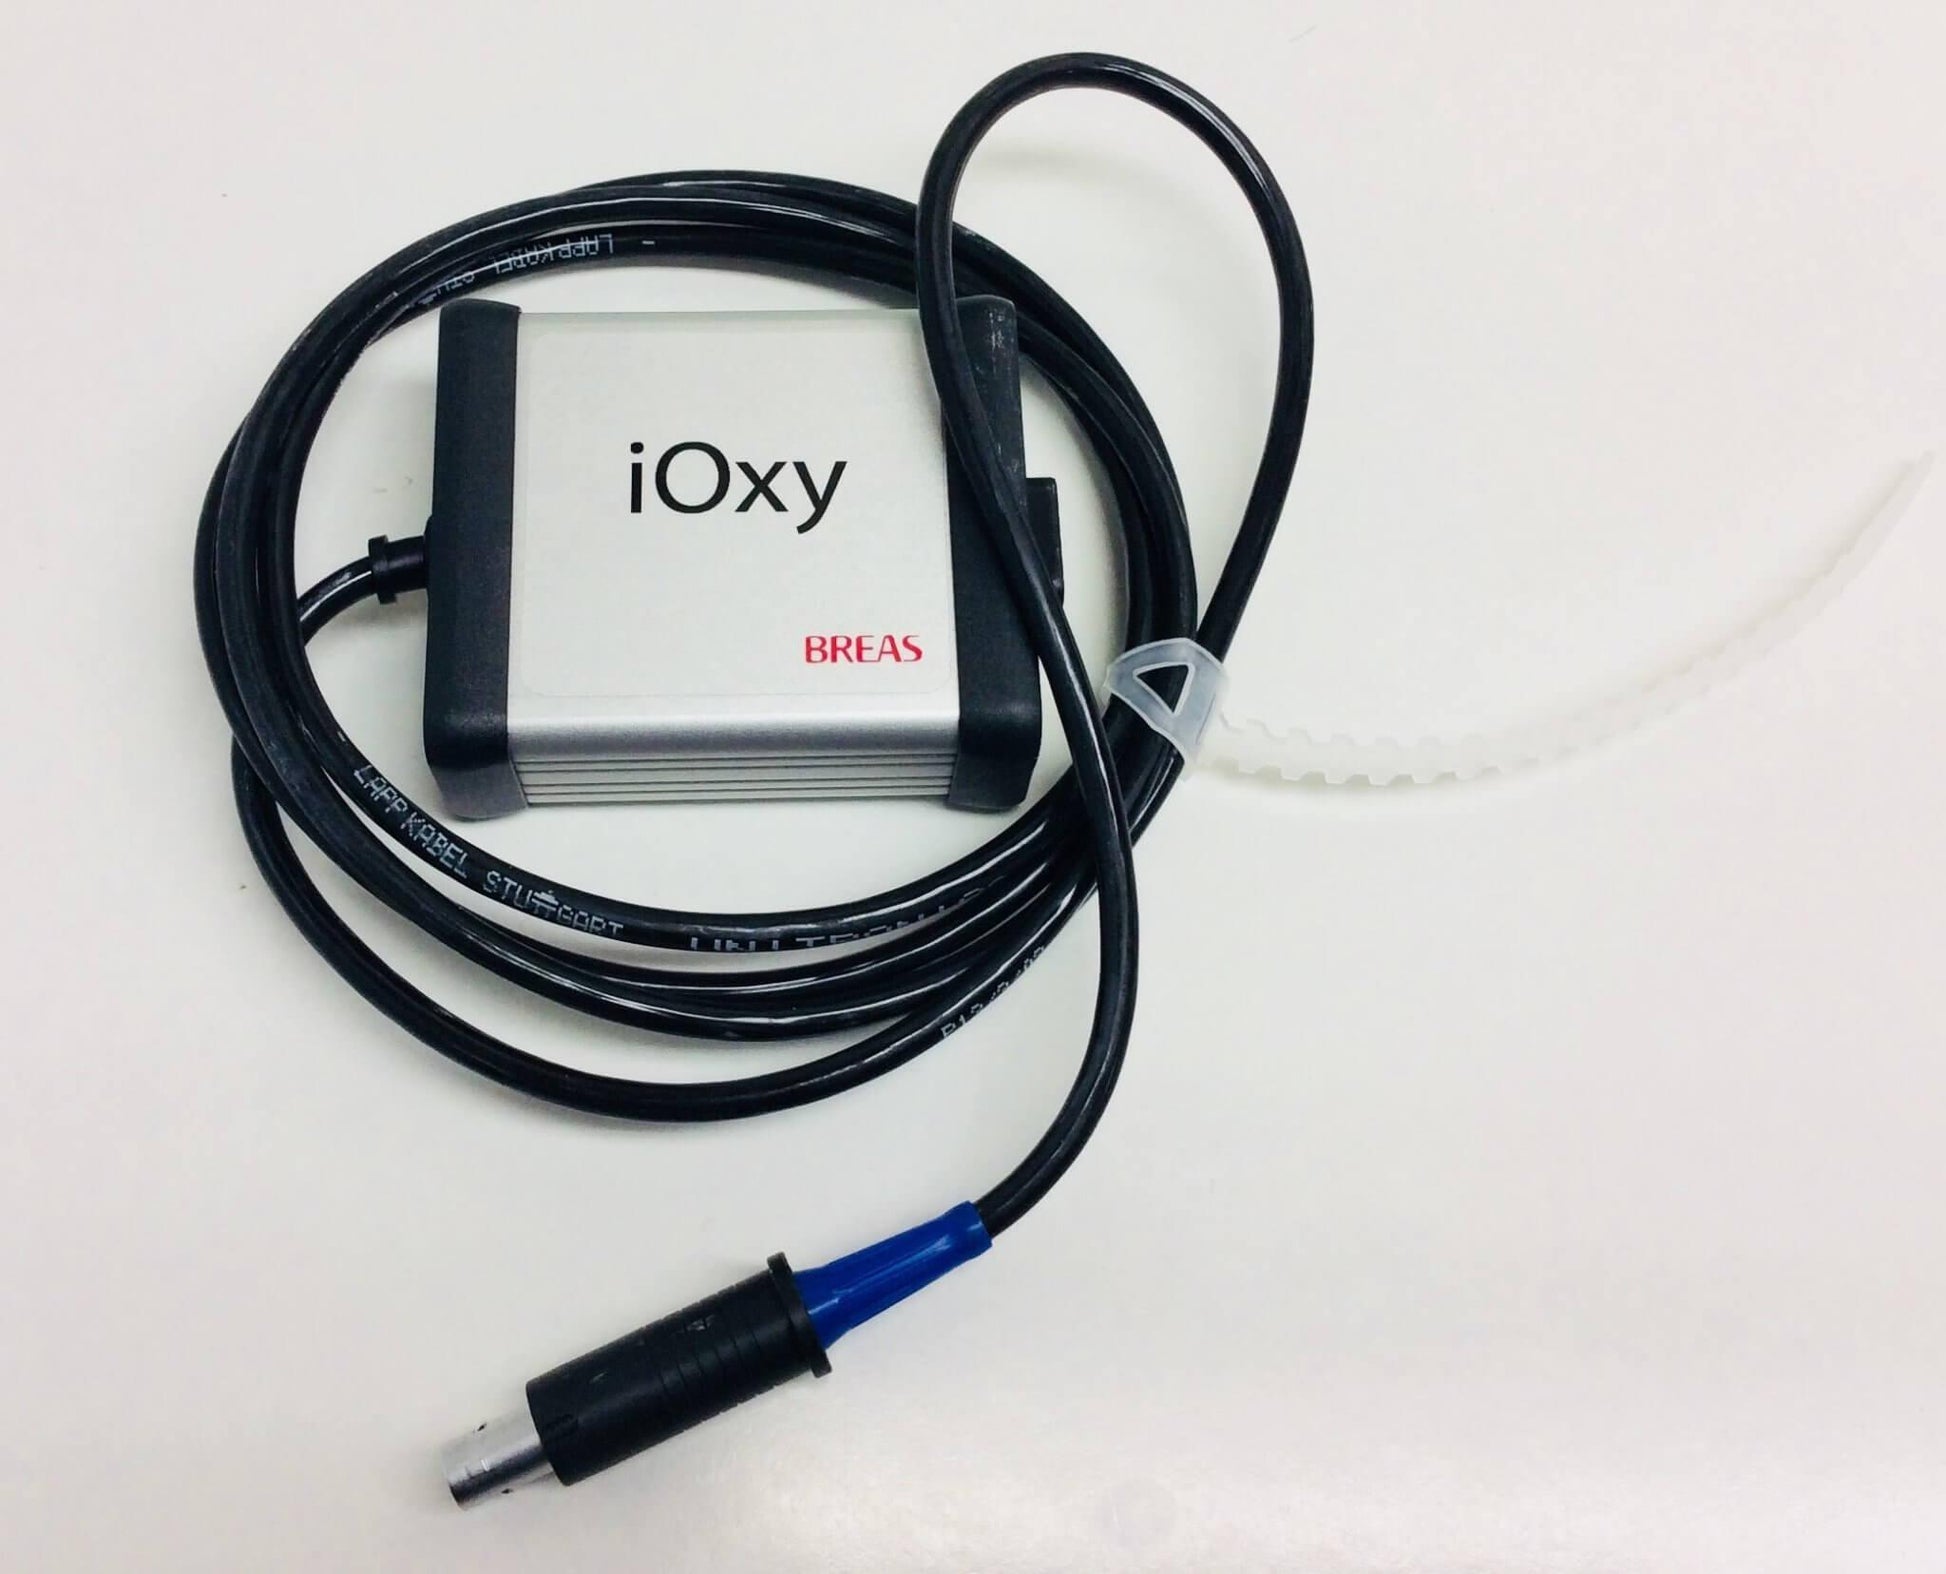 NEW Breas HDM iOxy Pulse Oximeter Sensor with Nonin Purelight SpO2 Flex Finger Probe Kit 005067 Warranty FREE Shipping - MBR Medicals